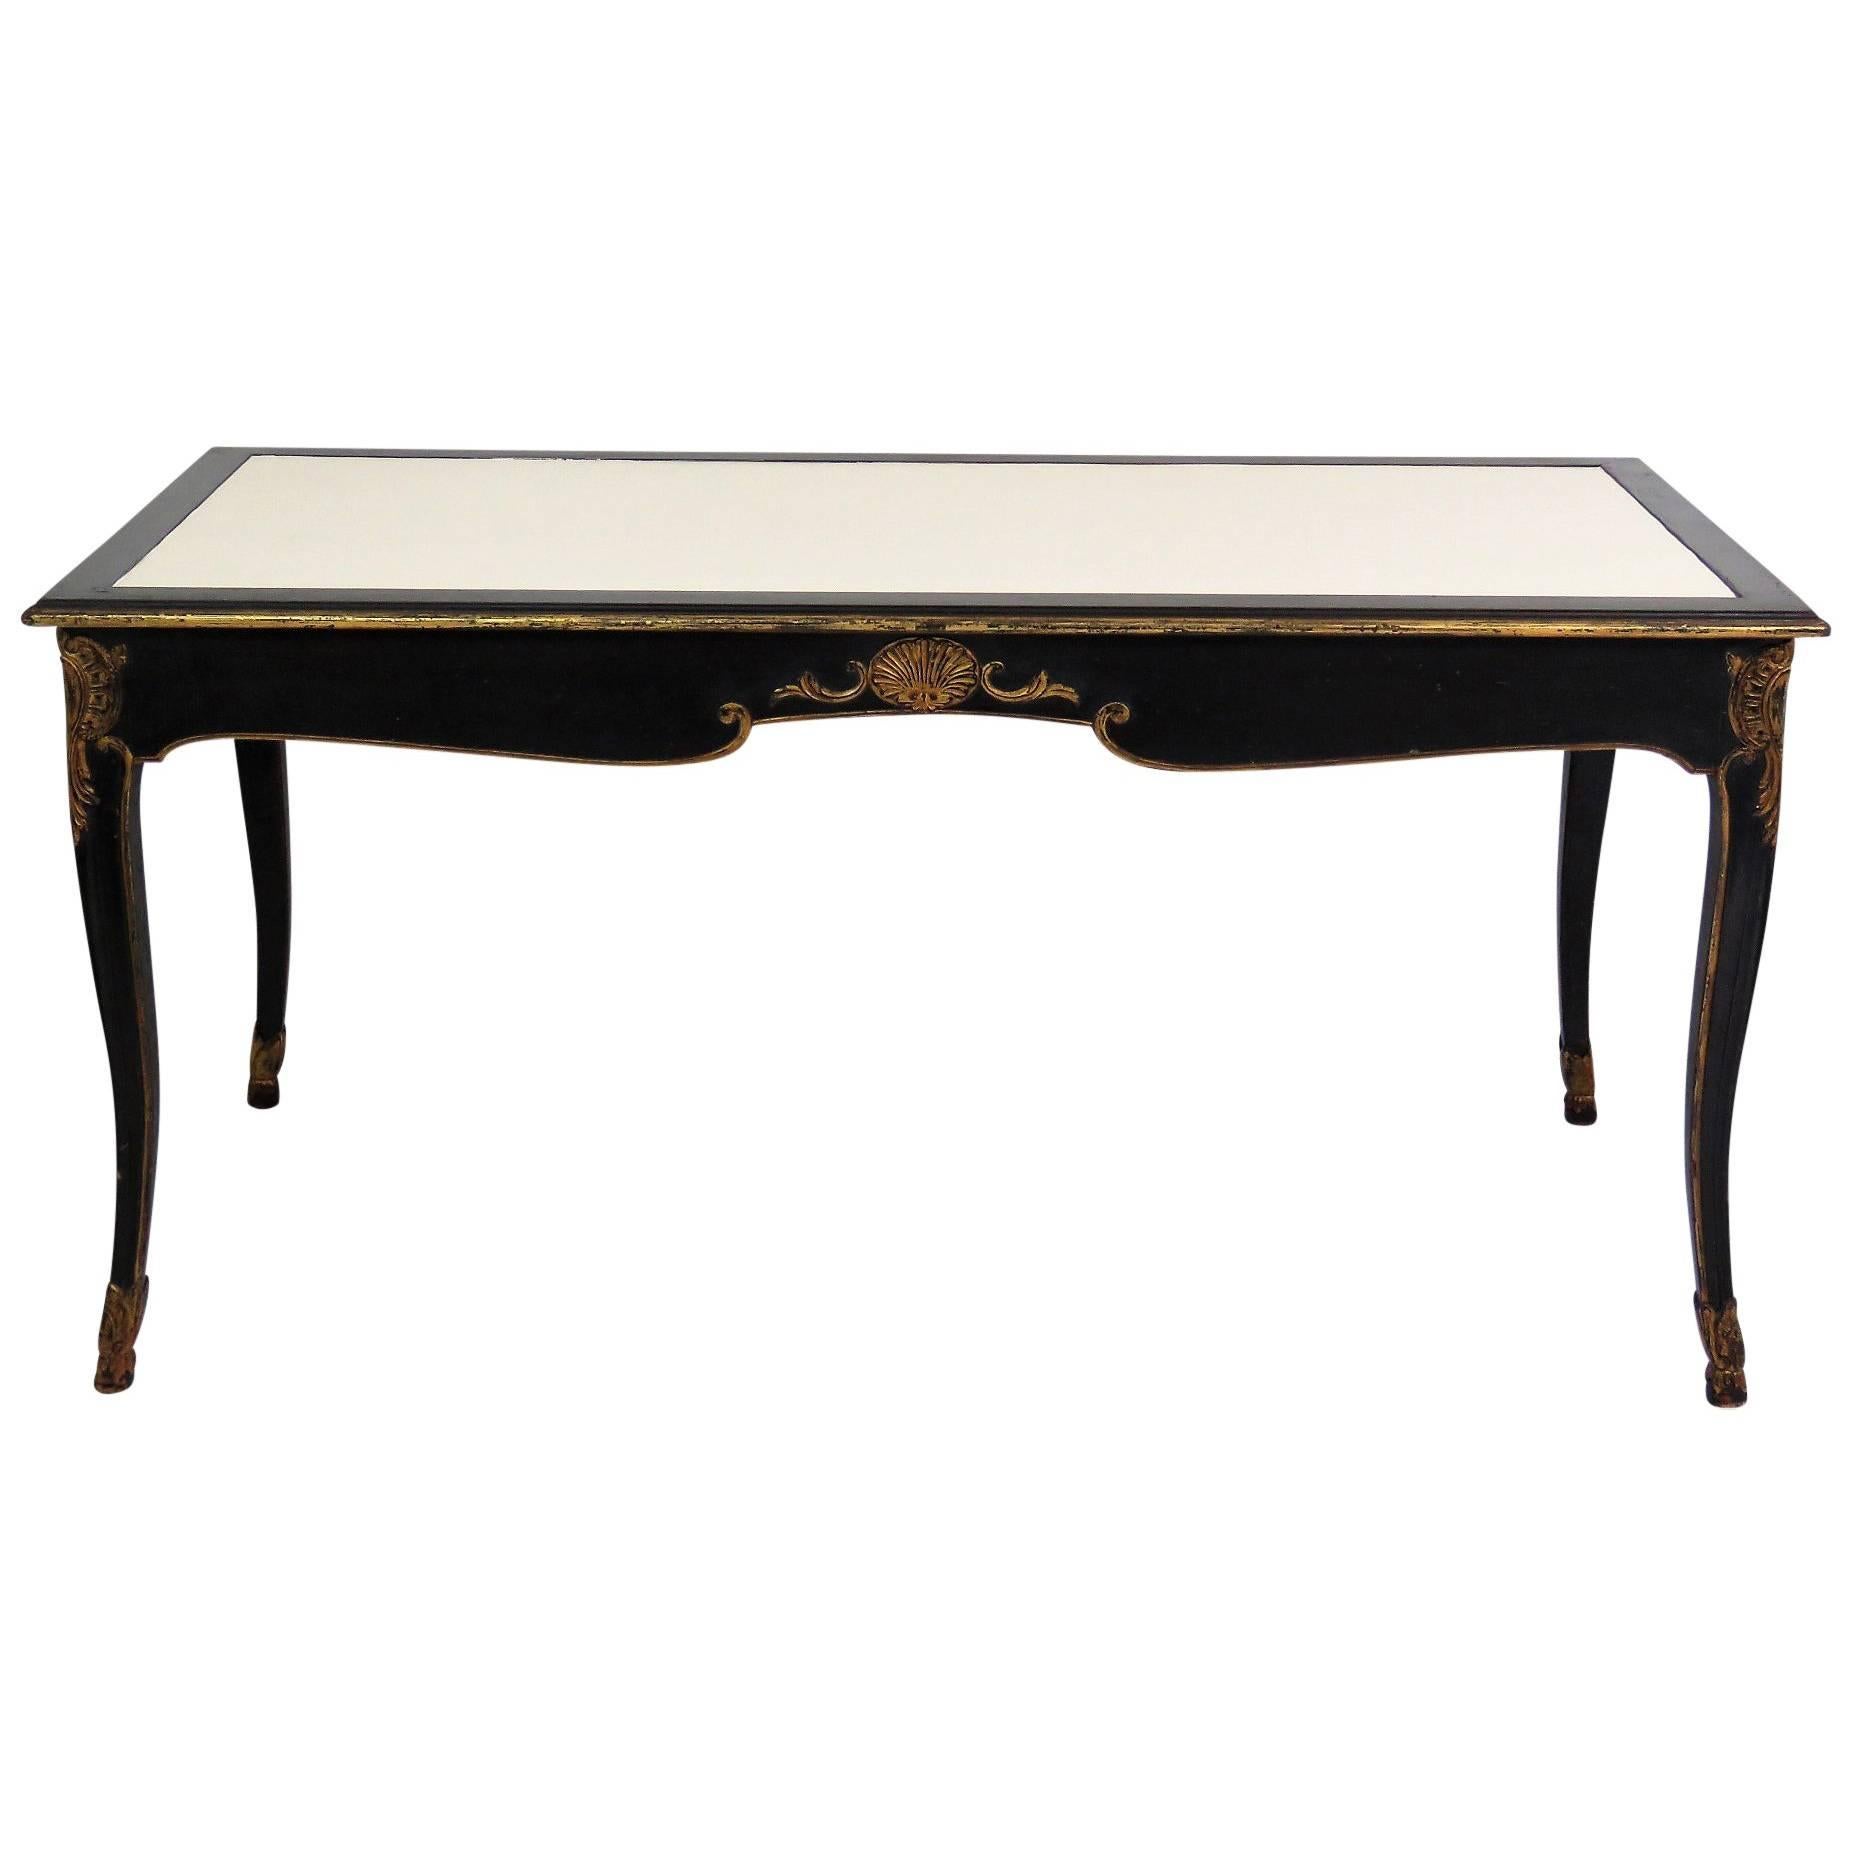 Maison Jansen Regency Style Ebonized and Gilt Leather Top Desk